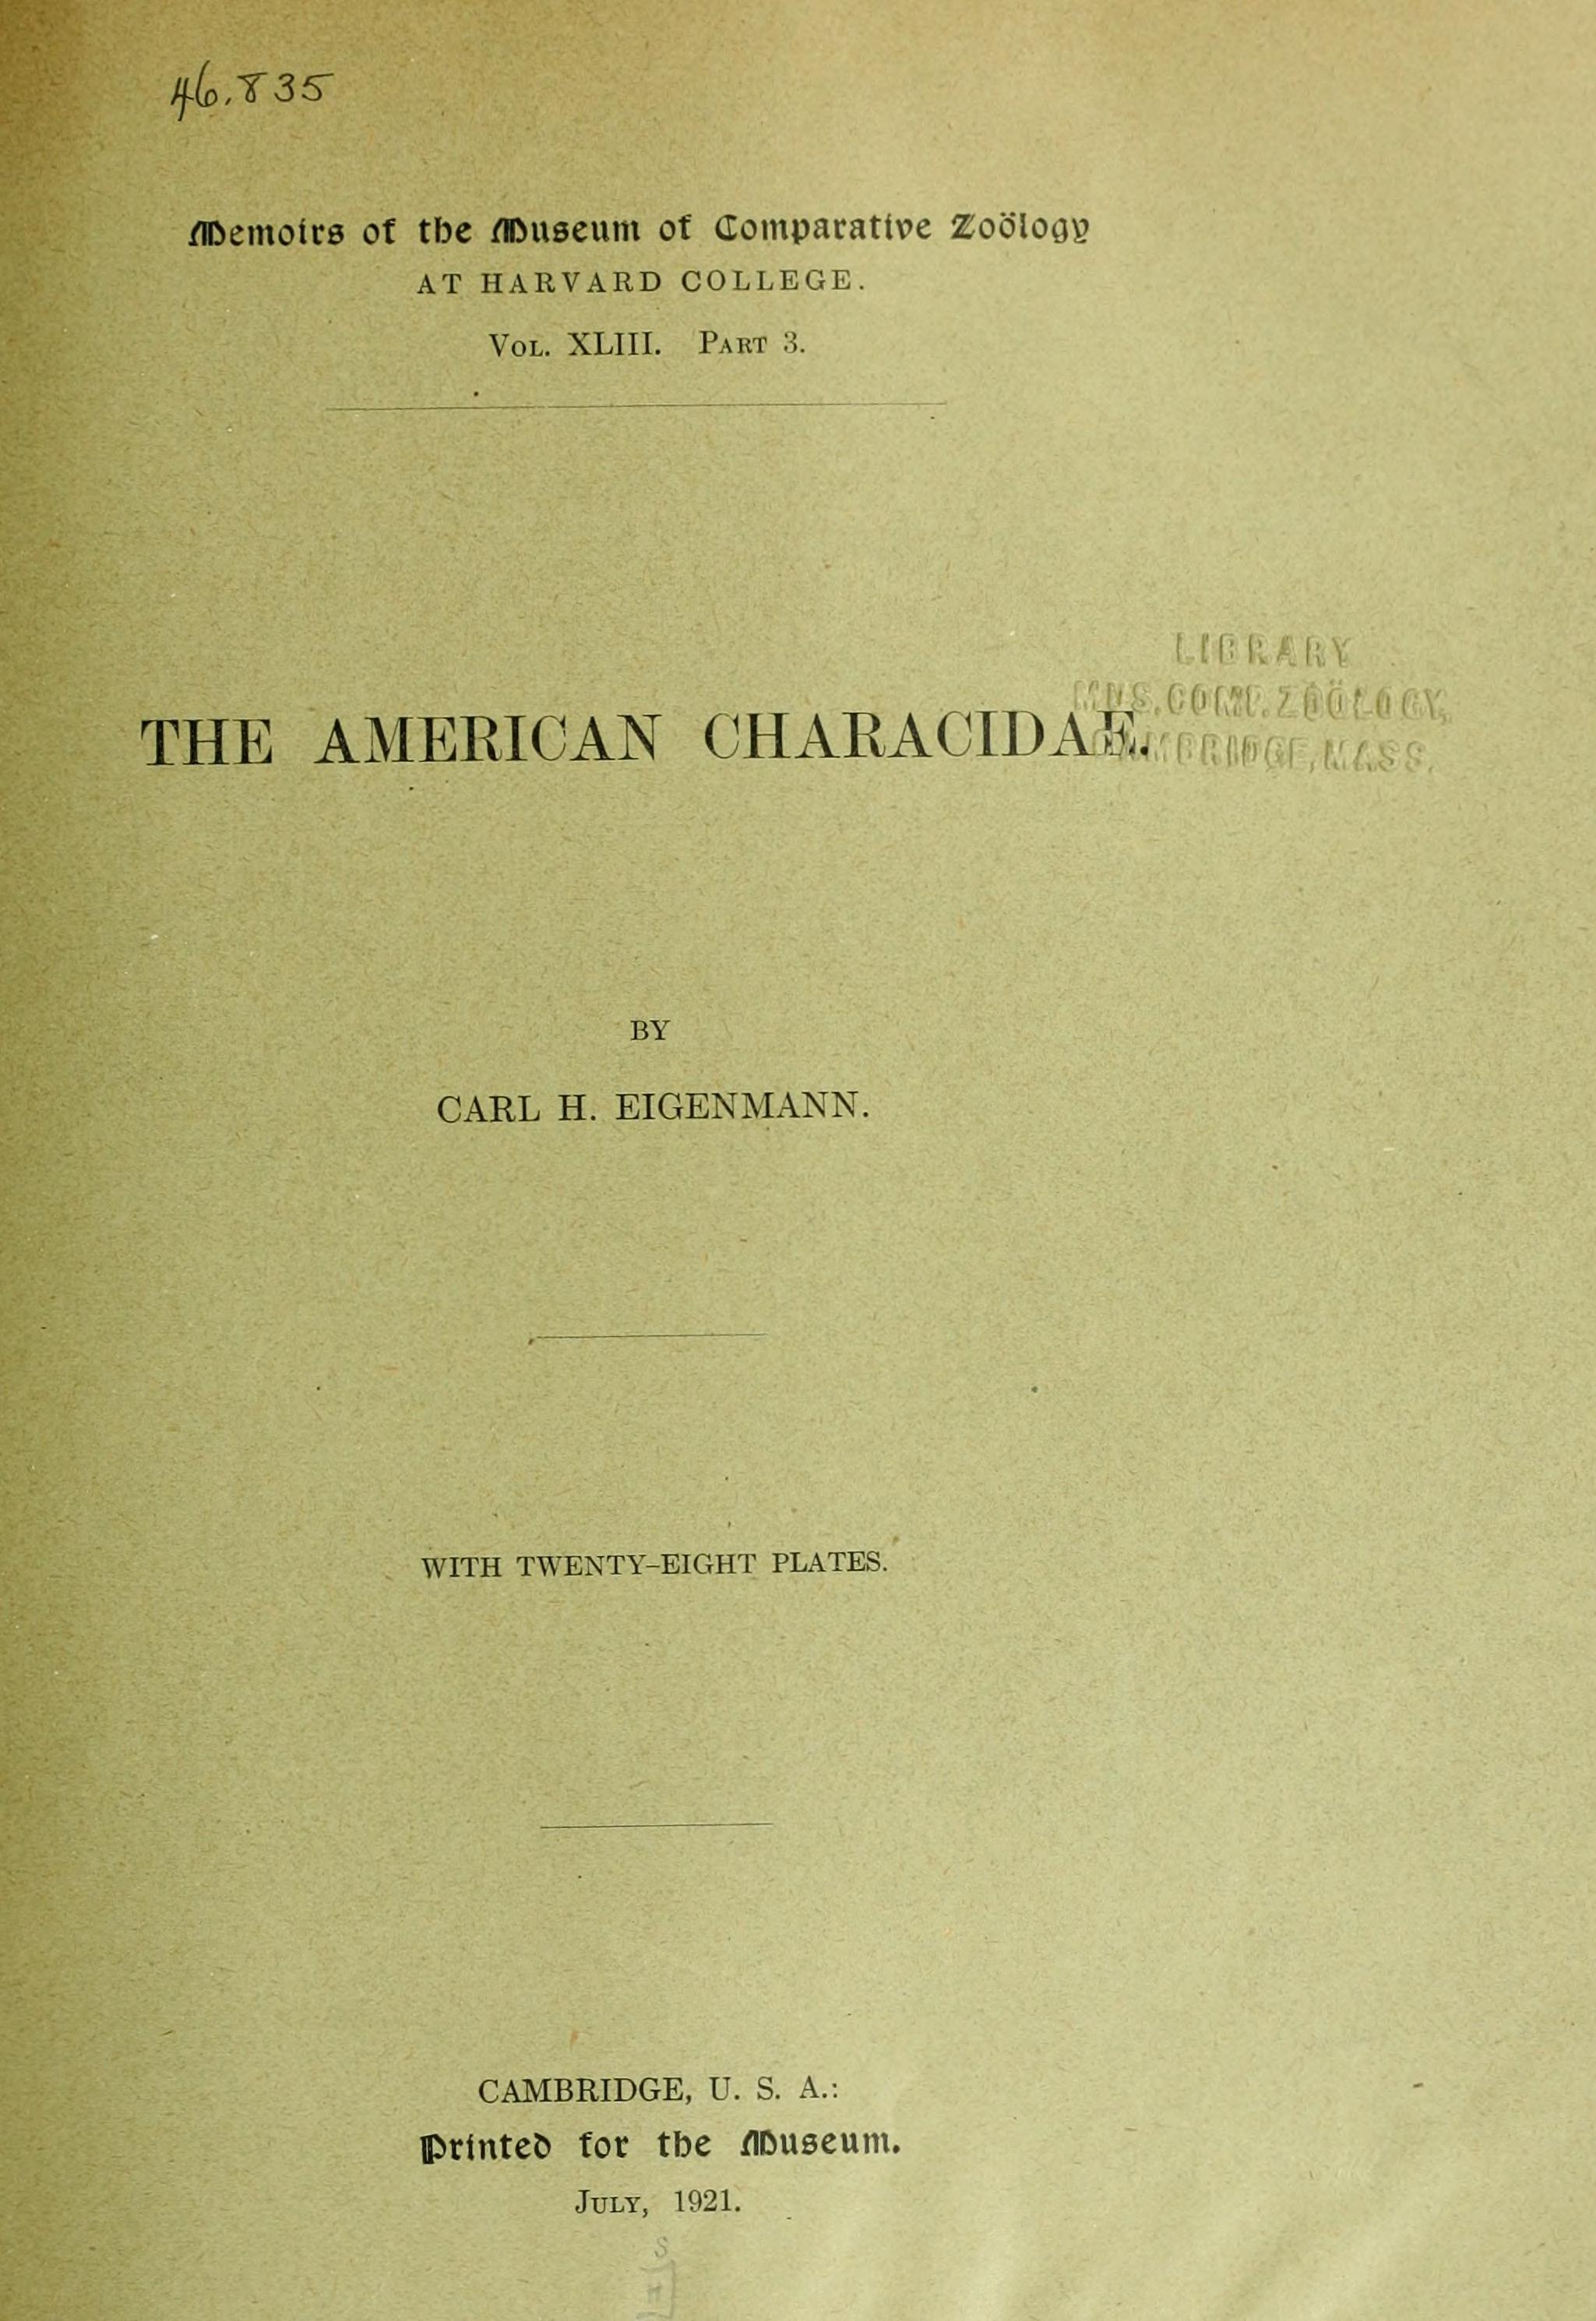 Media type: text; Eigenmann 1921 Description: MCZ Memoirs Vol. XLIII Part III;